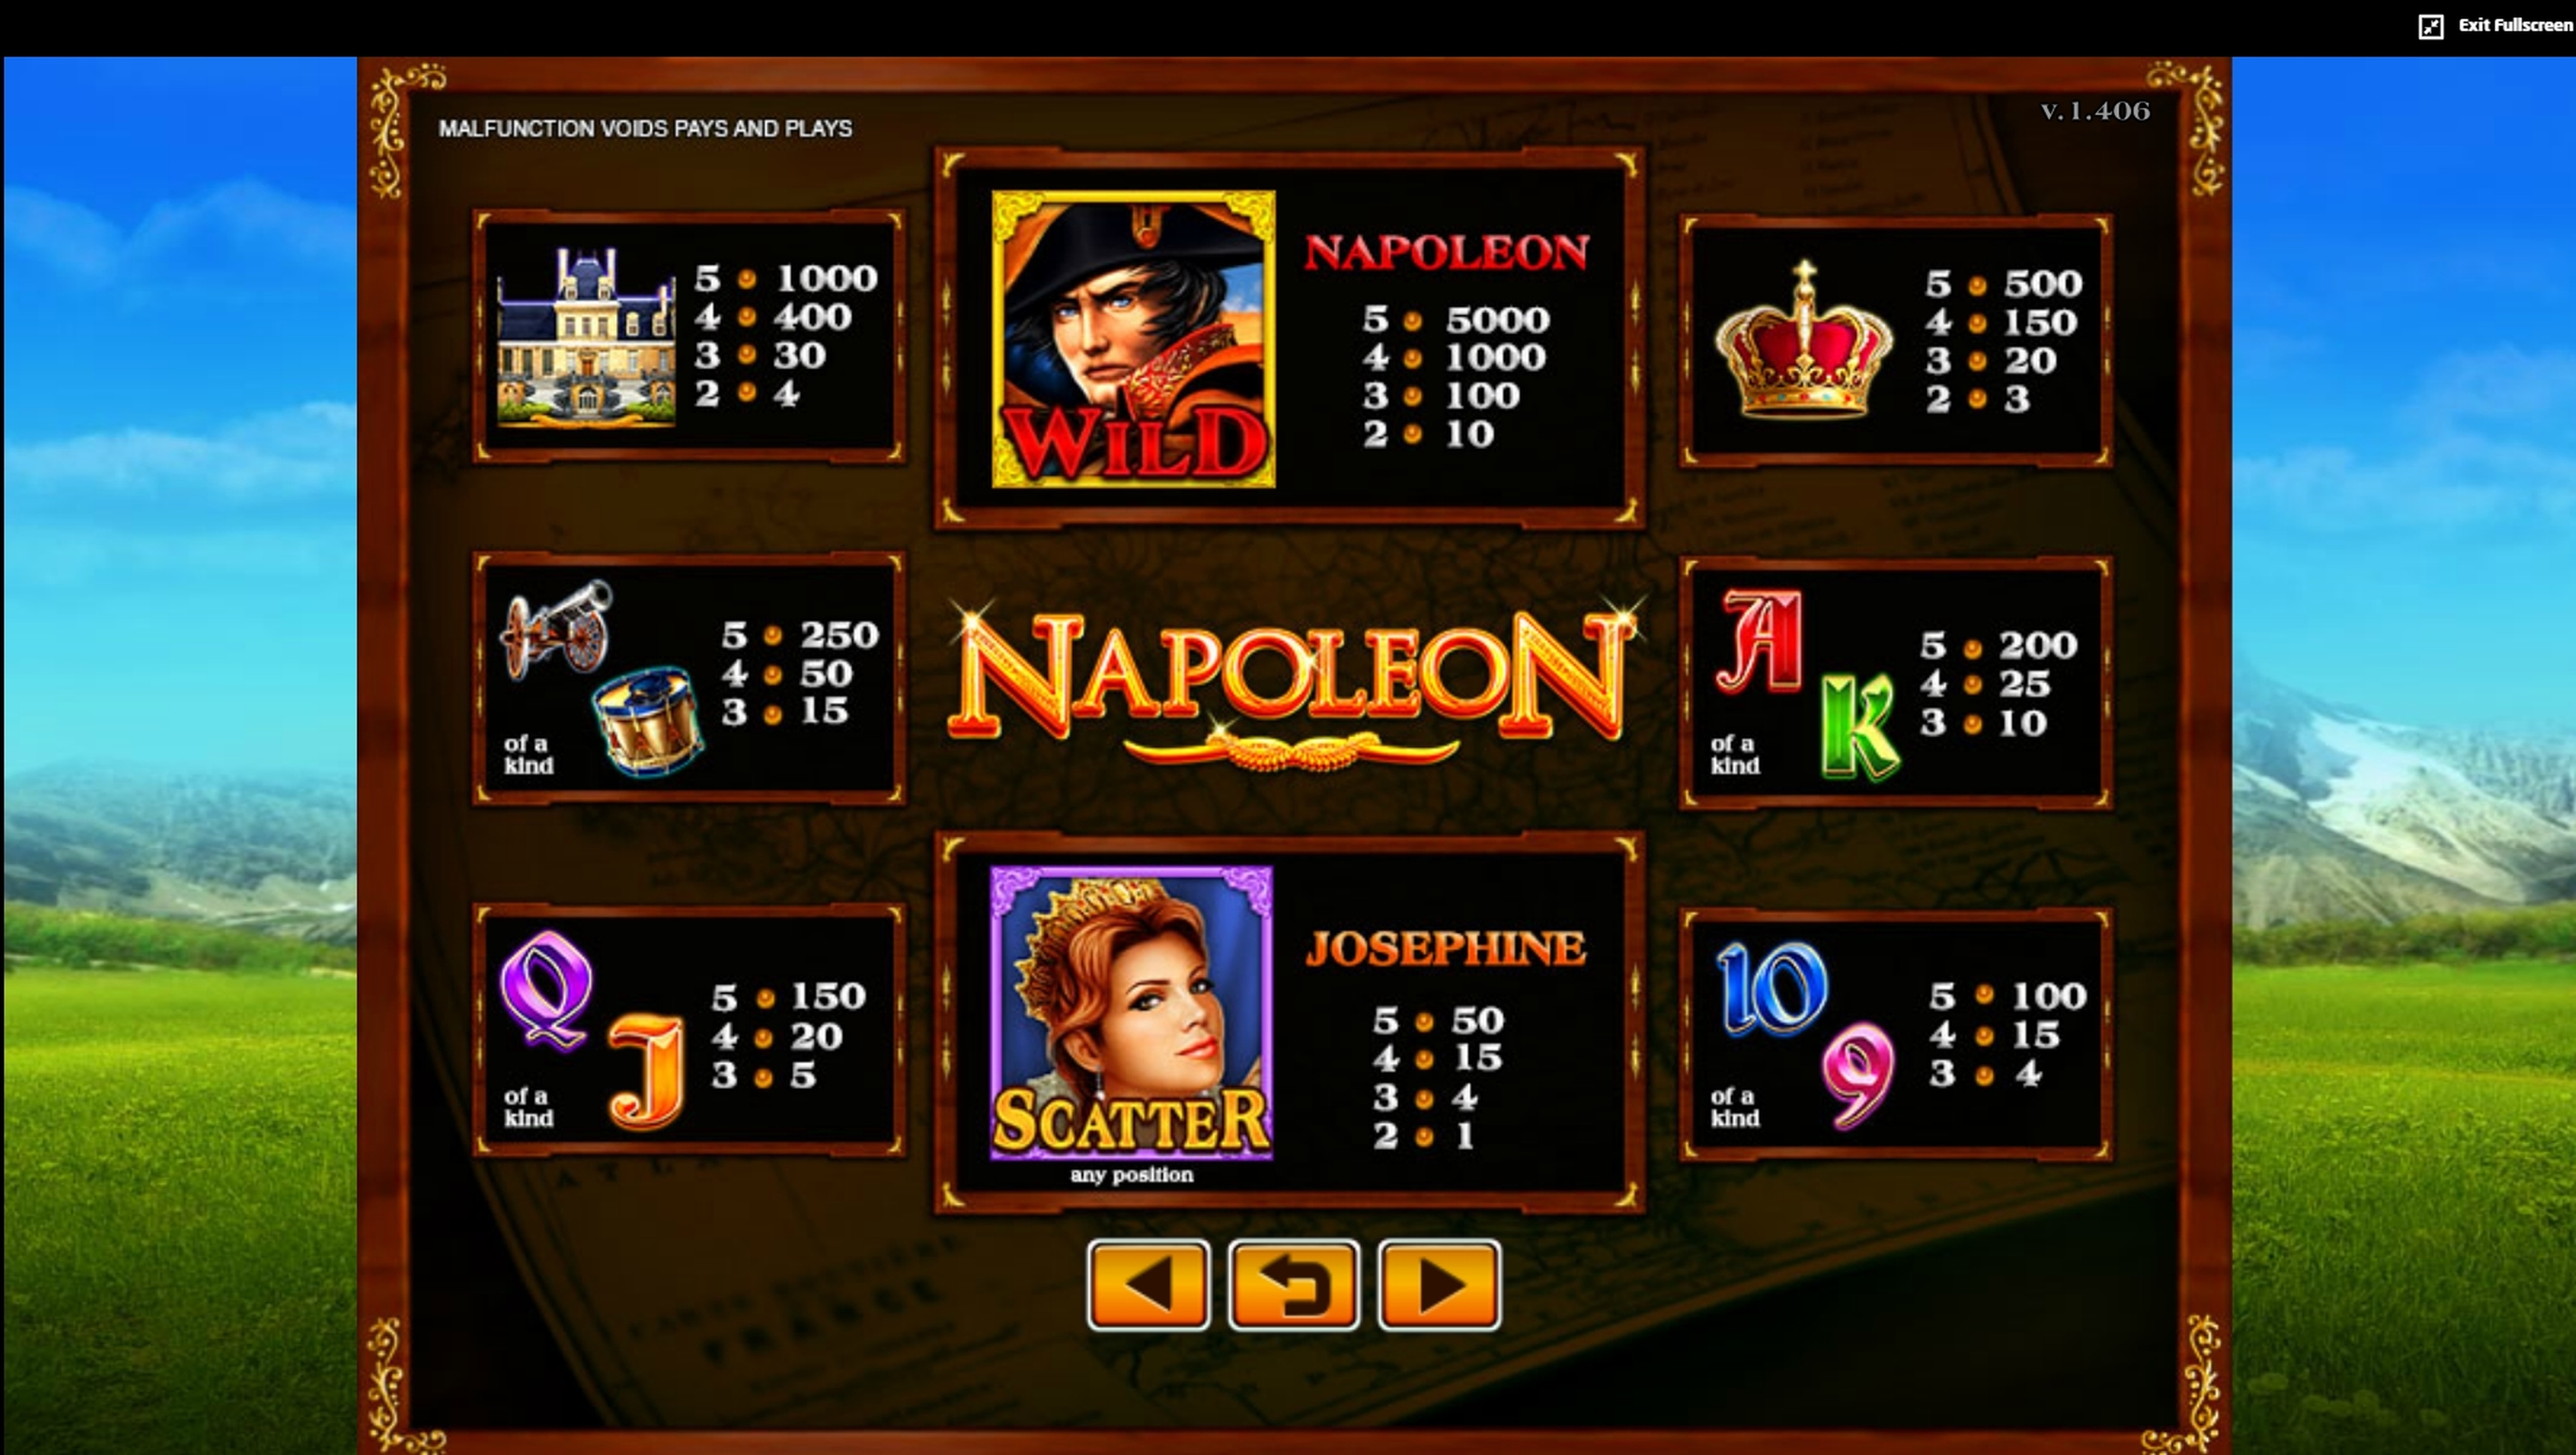 Info of Napoleon Slot Game by JDB168